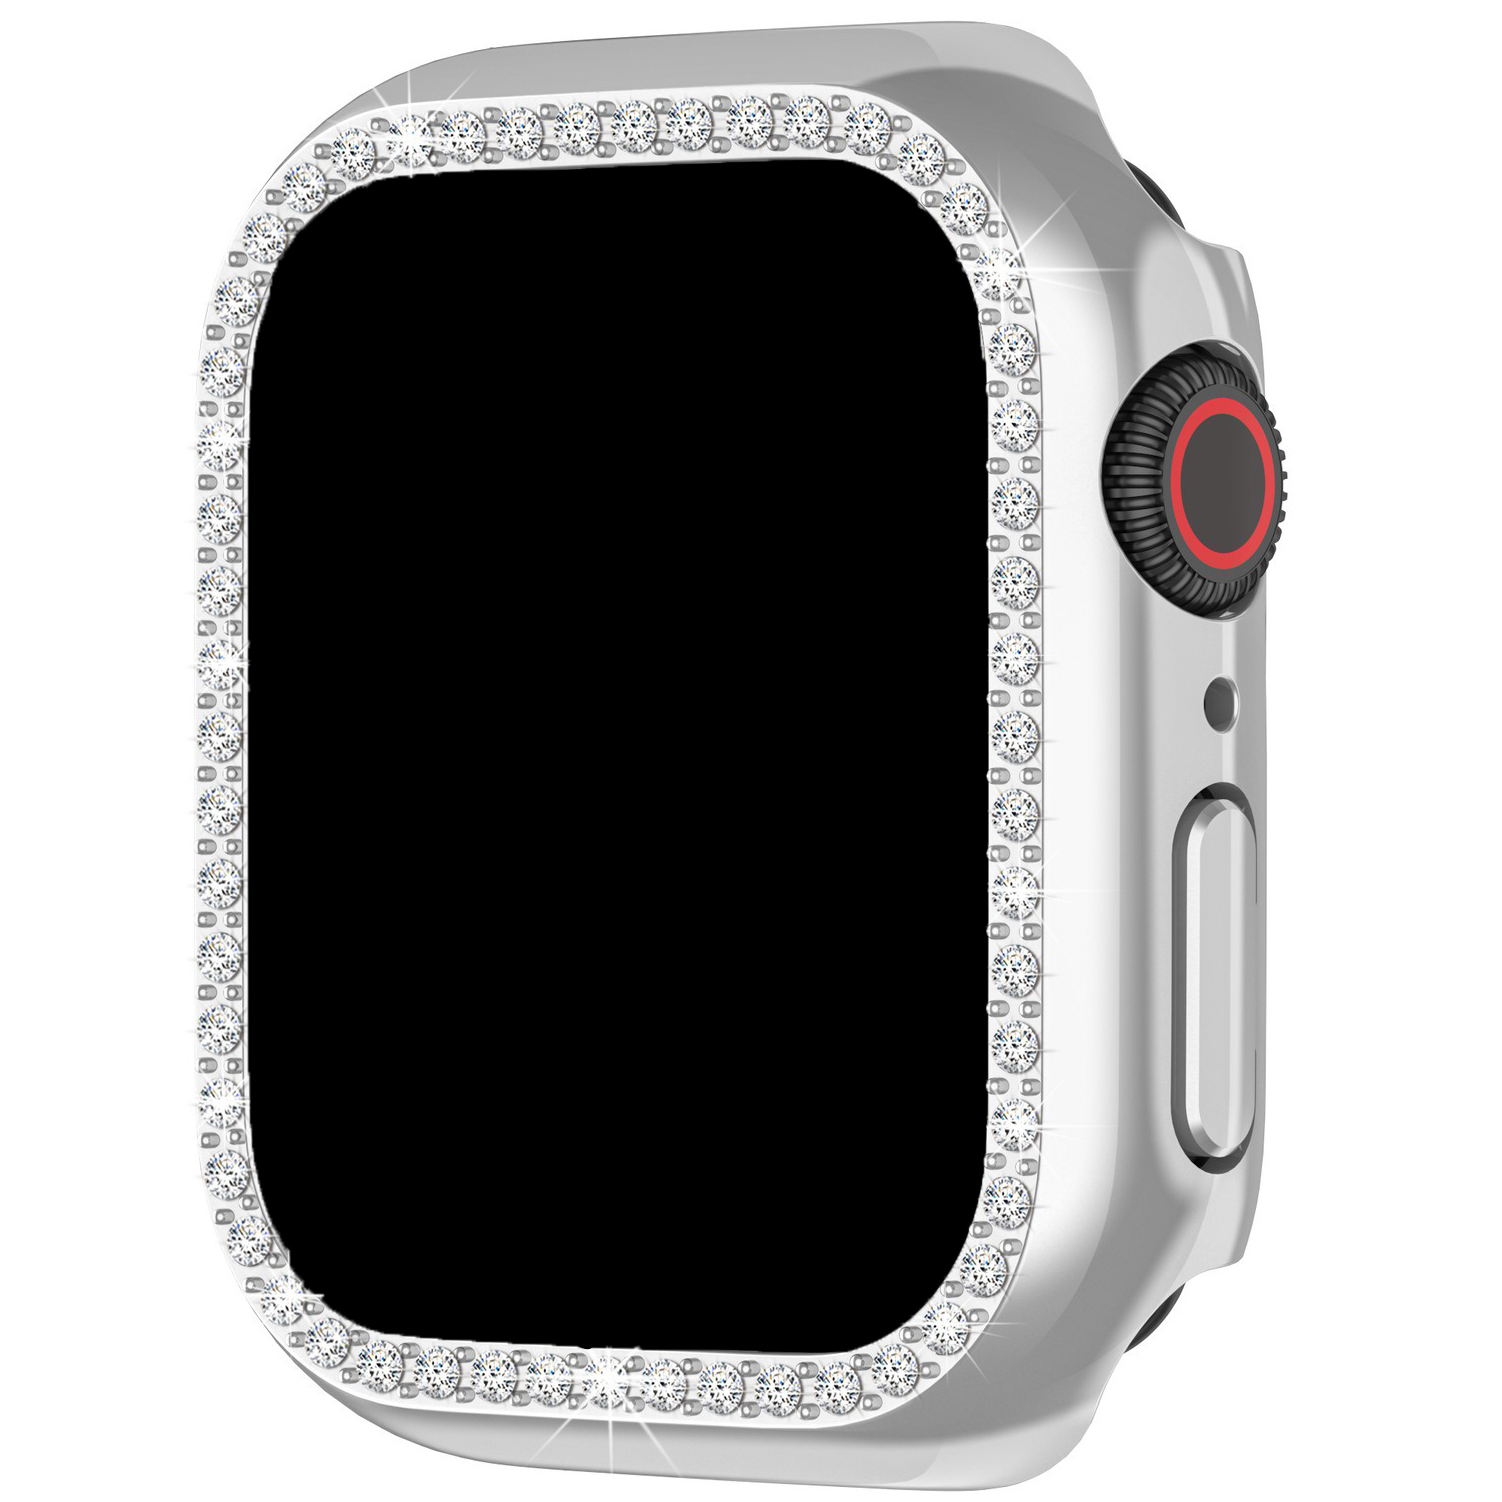 Apple Watch Diamond Case - Silver